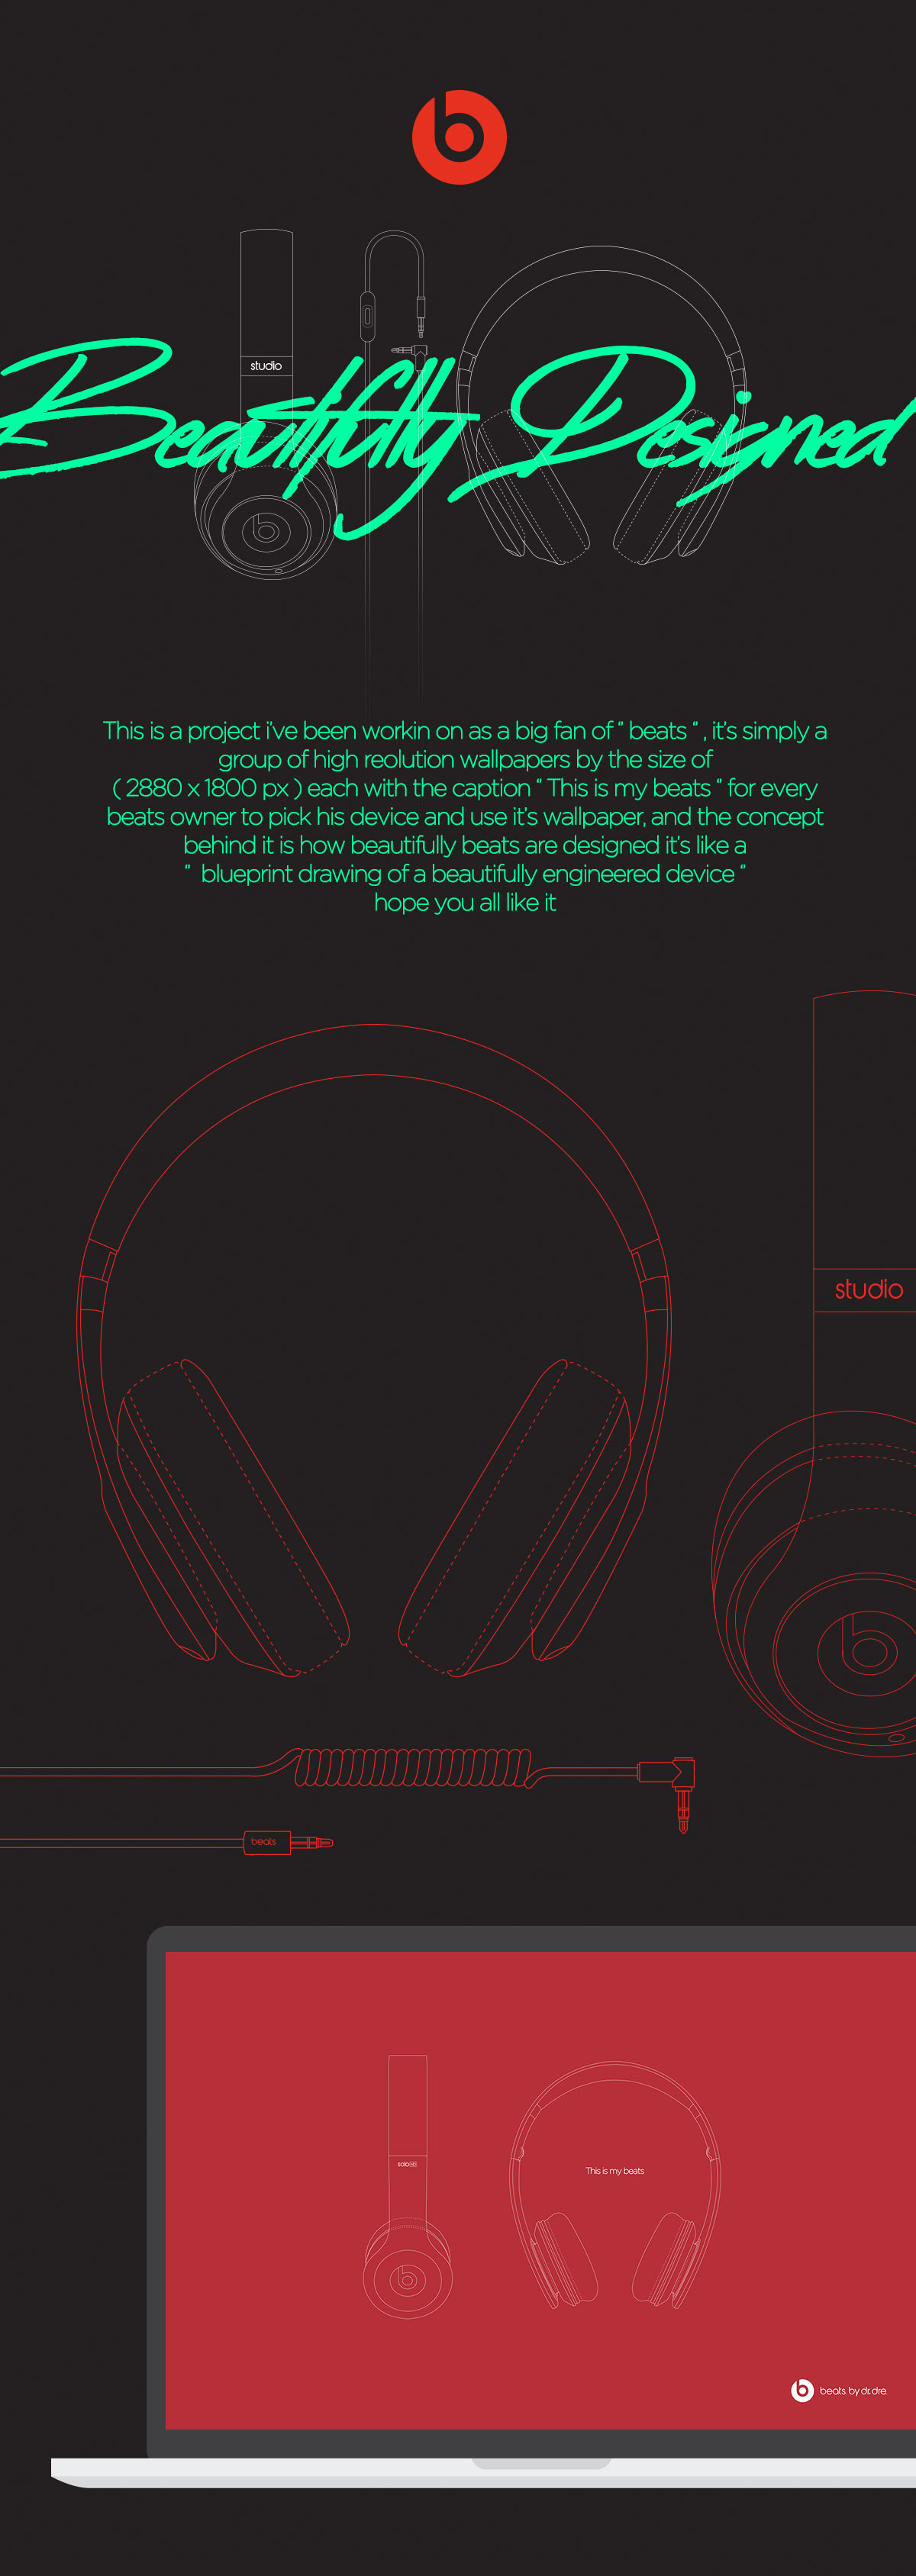 beats headphones wallpaper my beats speakers earphones beats by dr.dre beautifully designed vector blueprints @beatsbydre #beatsbydre